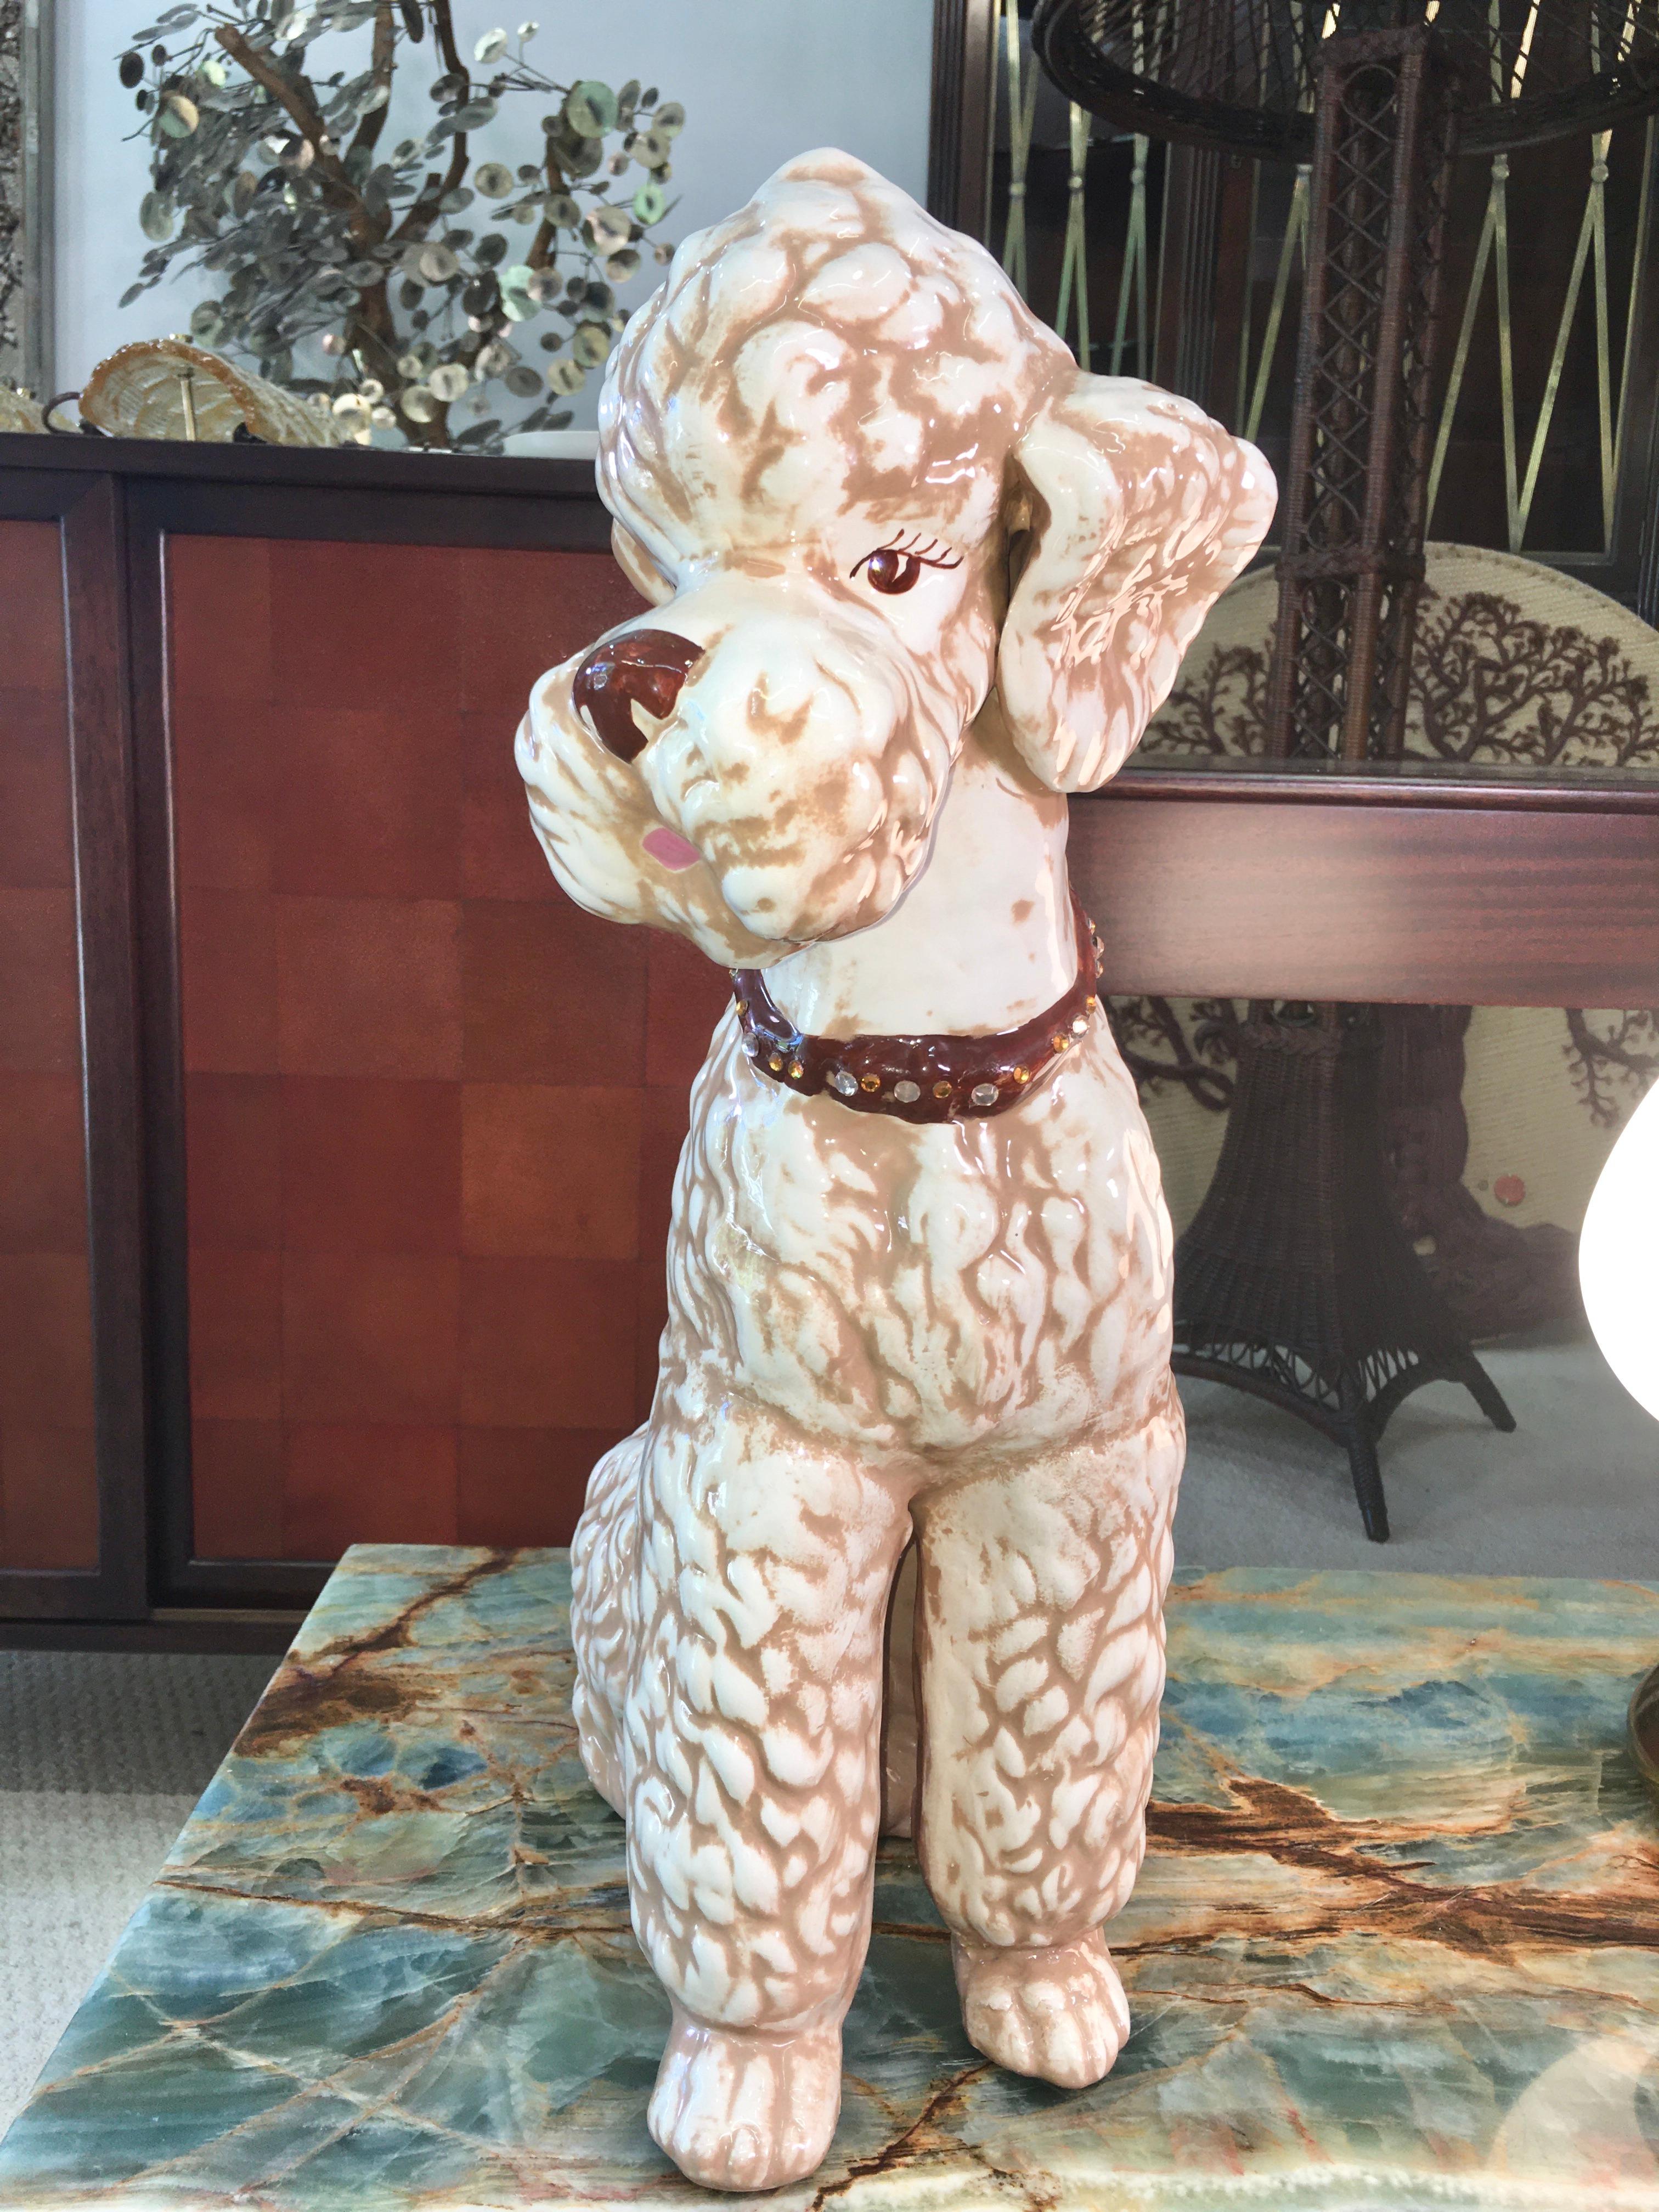 vintage ceramic poodle figurines